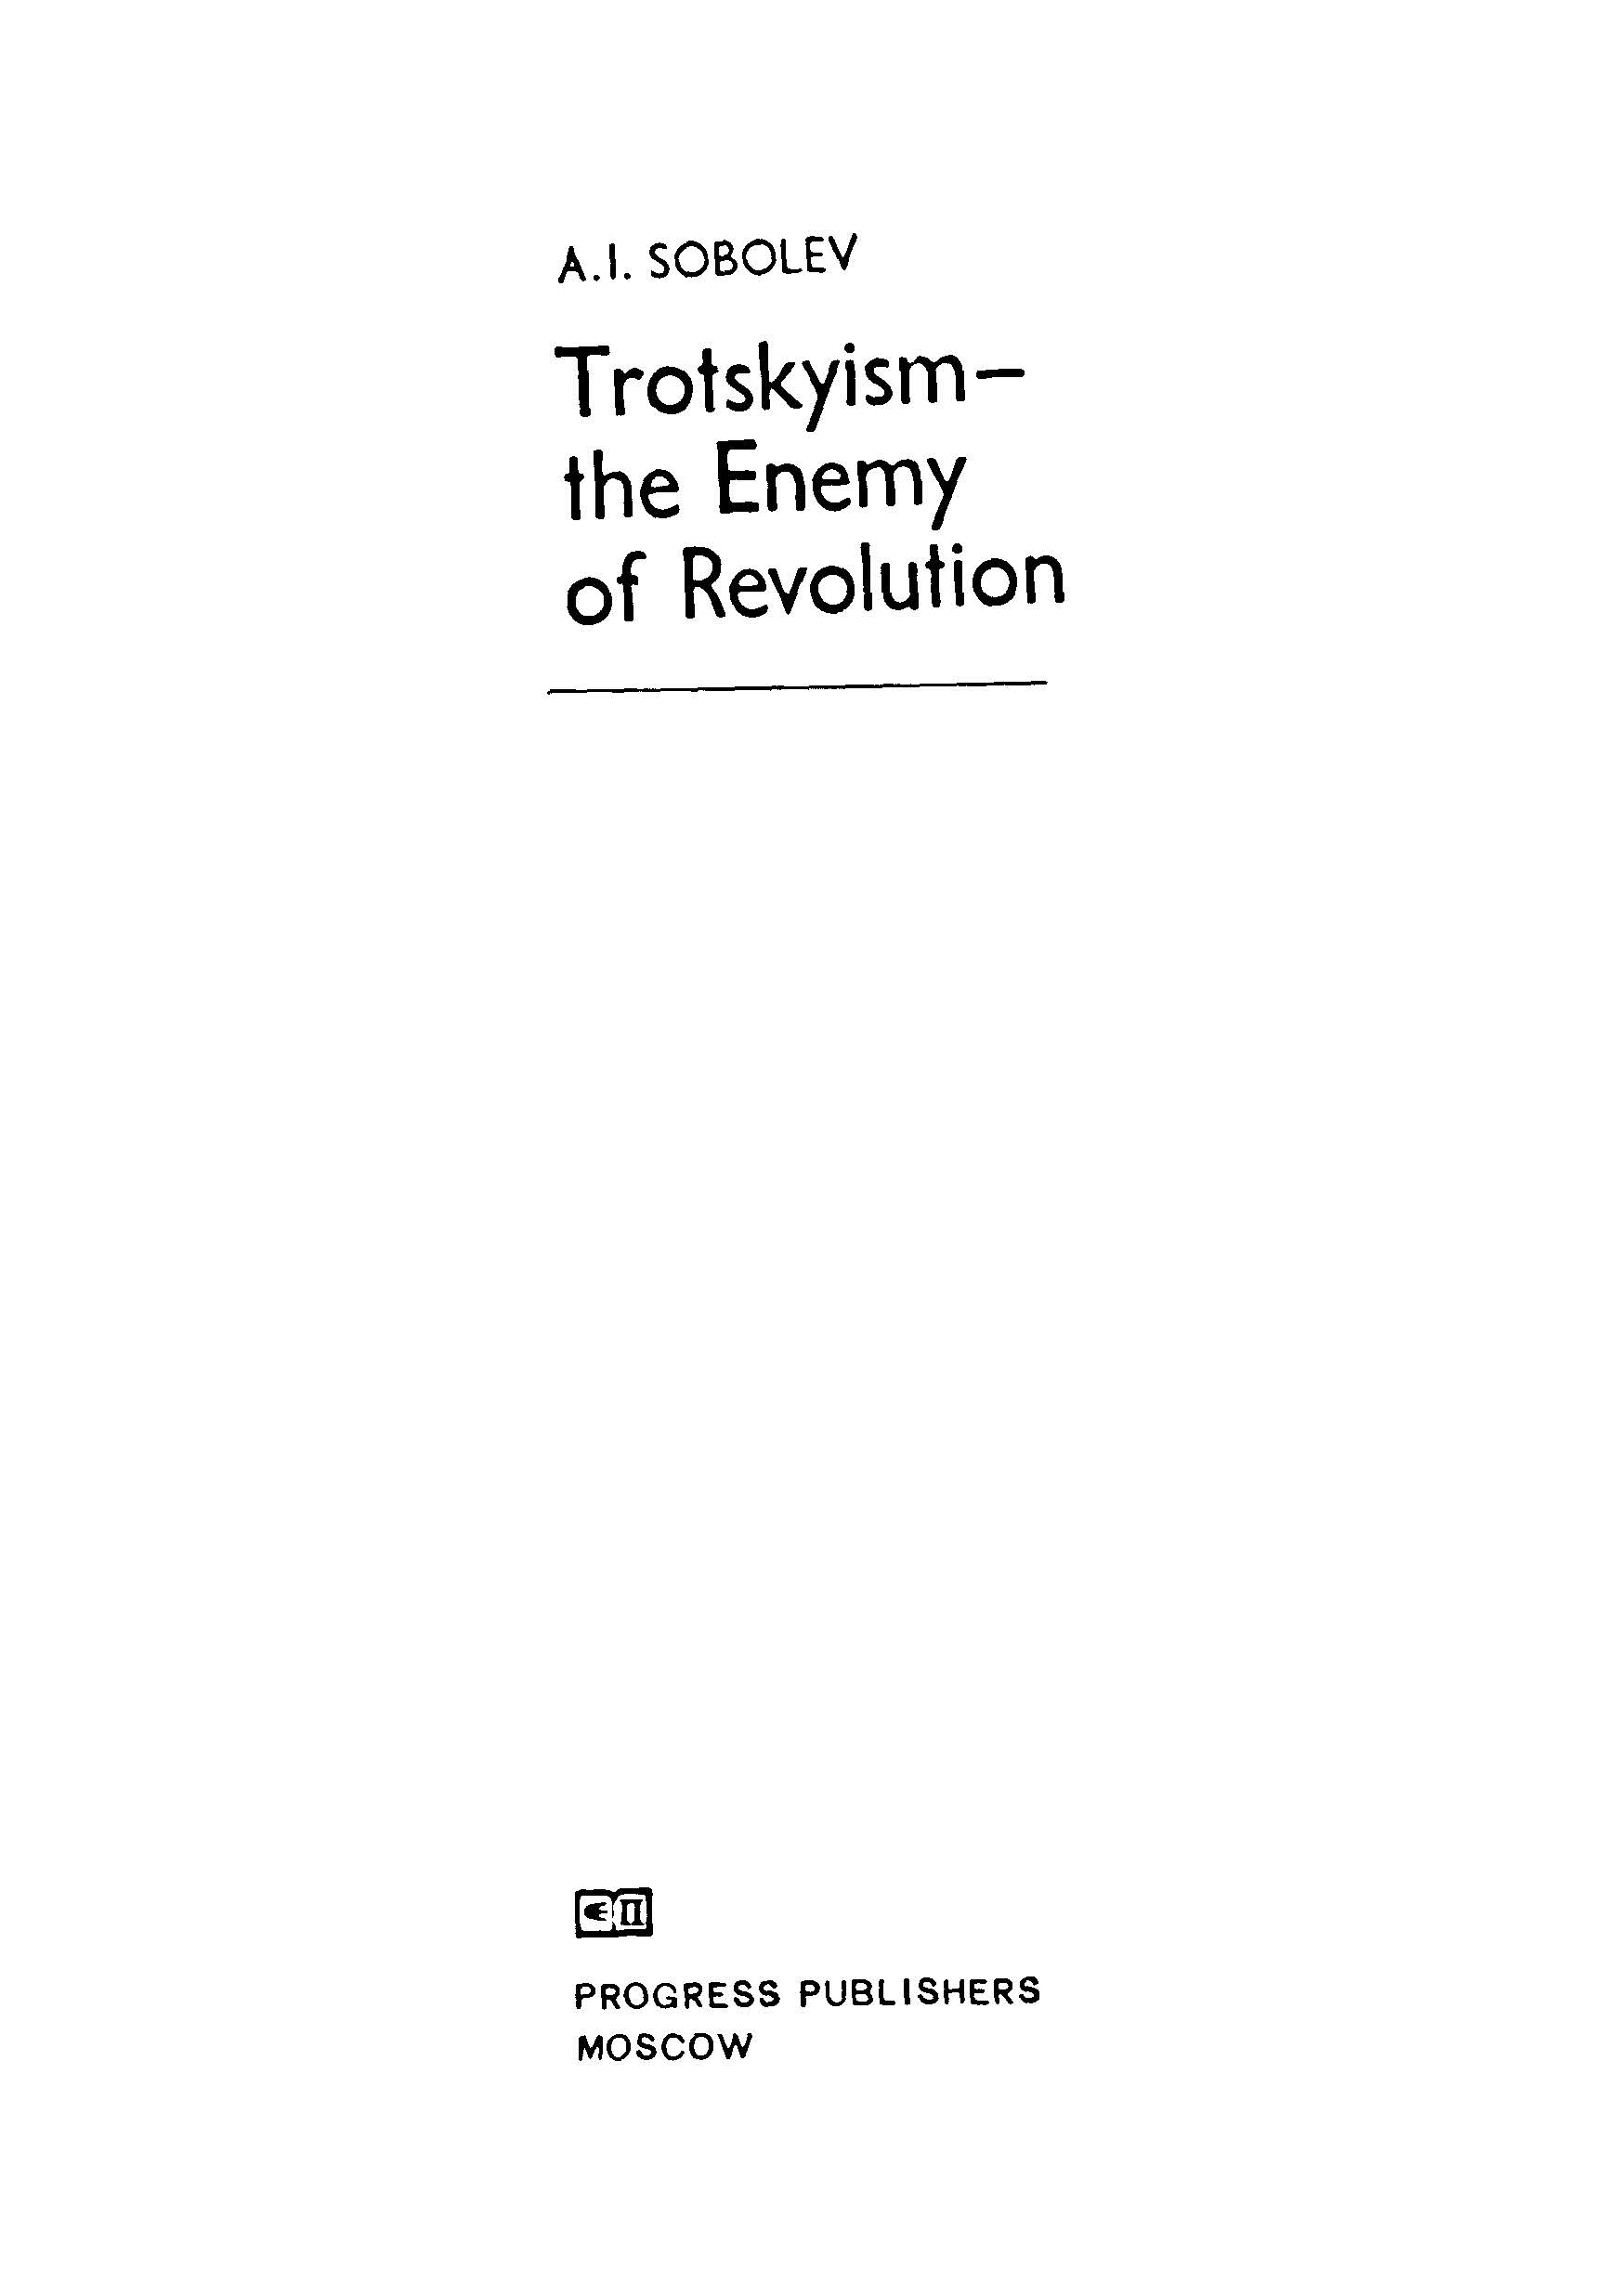 Trotskyism-the enemy of revolution